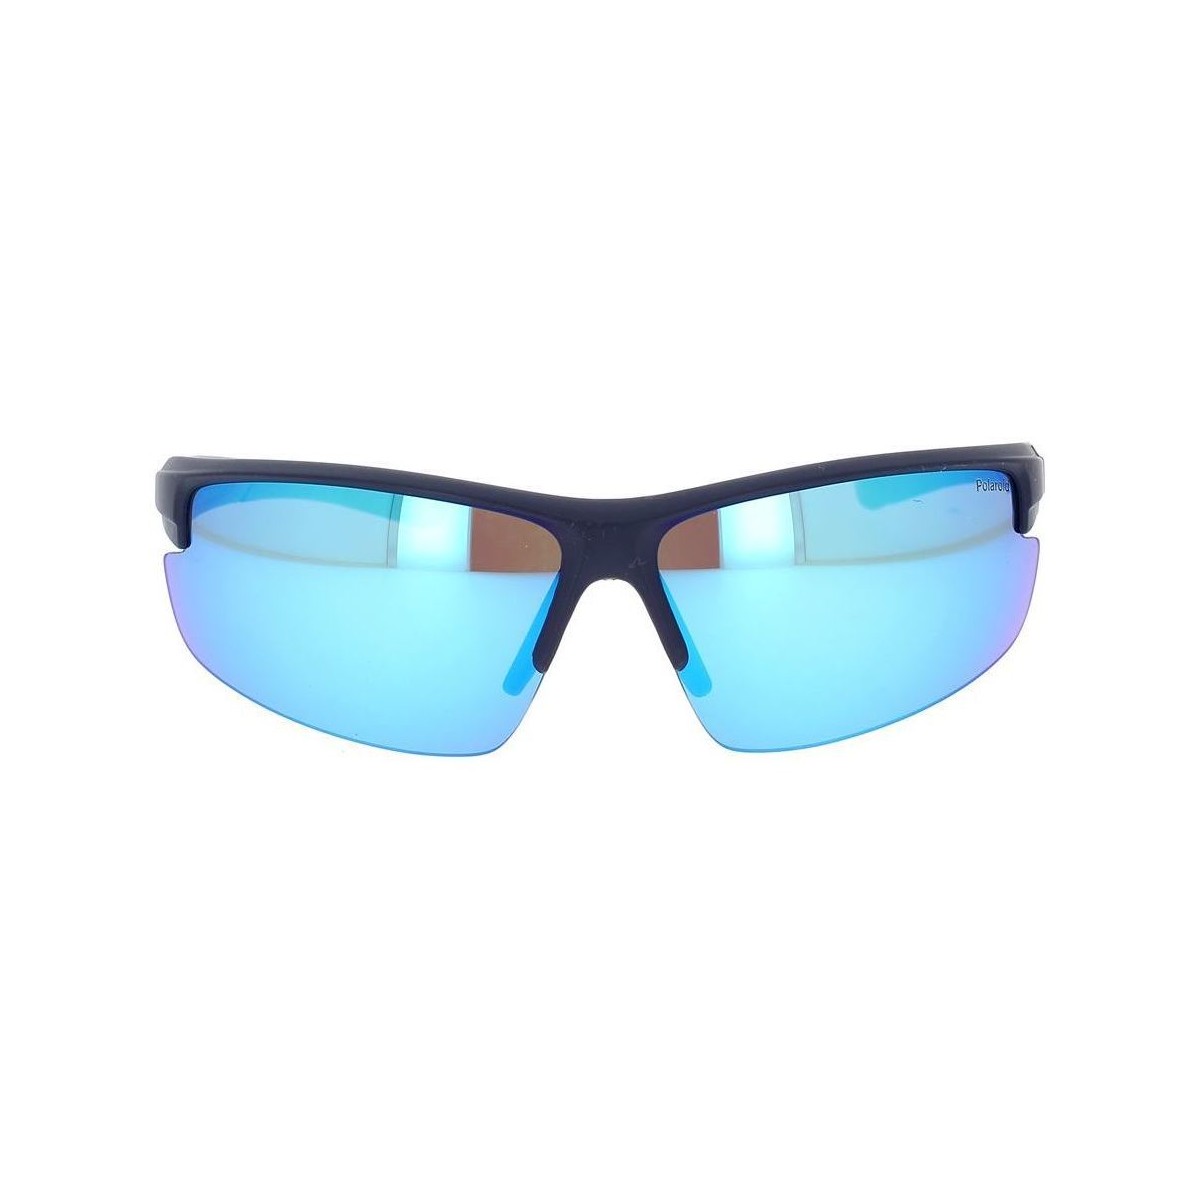 Relojes & Joyas Gafas de sol Polaroid Occhiali da Sole  PLD7027/S PJP Azul